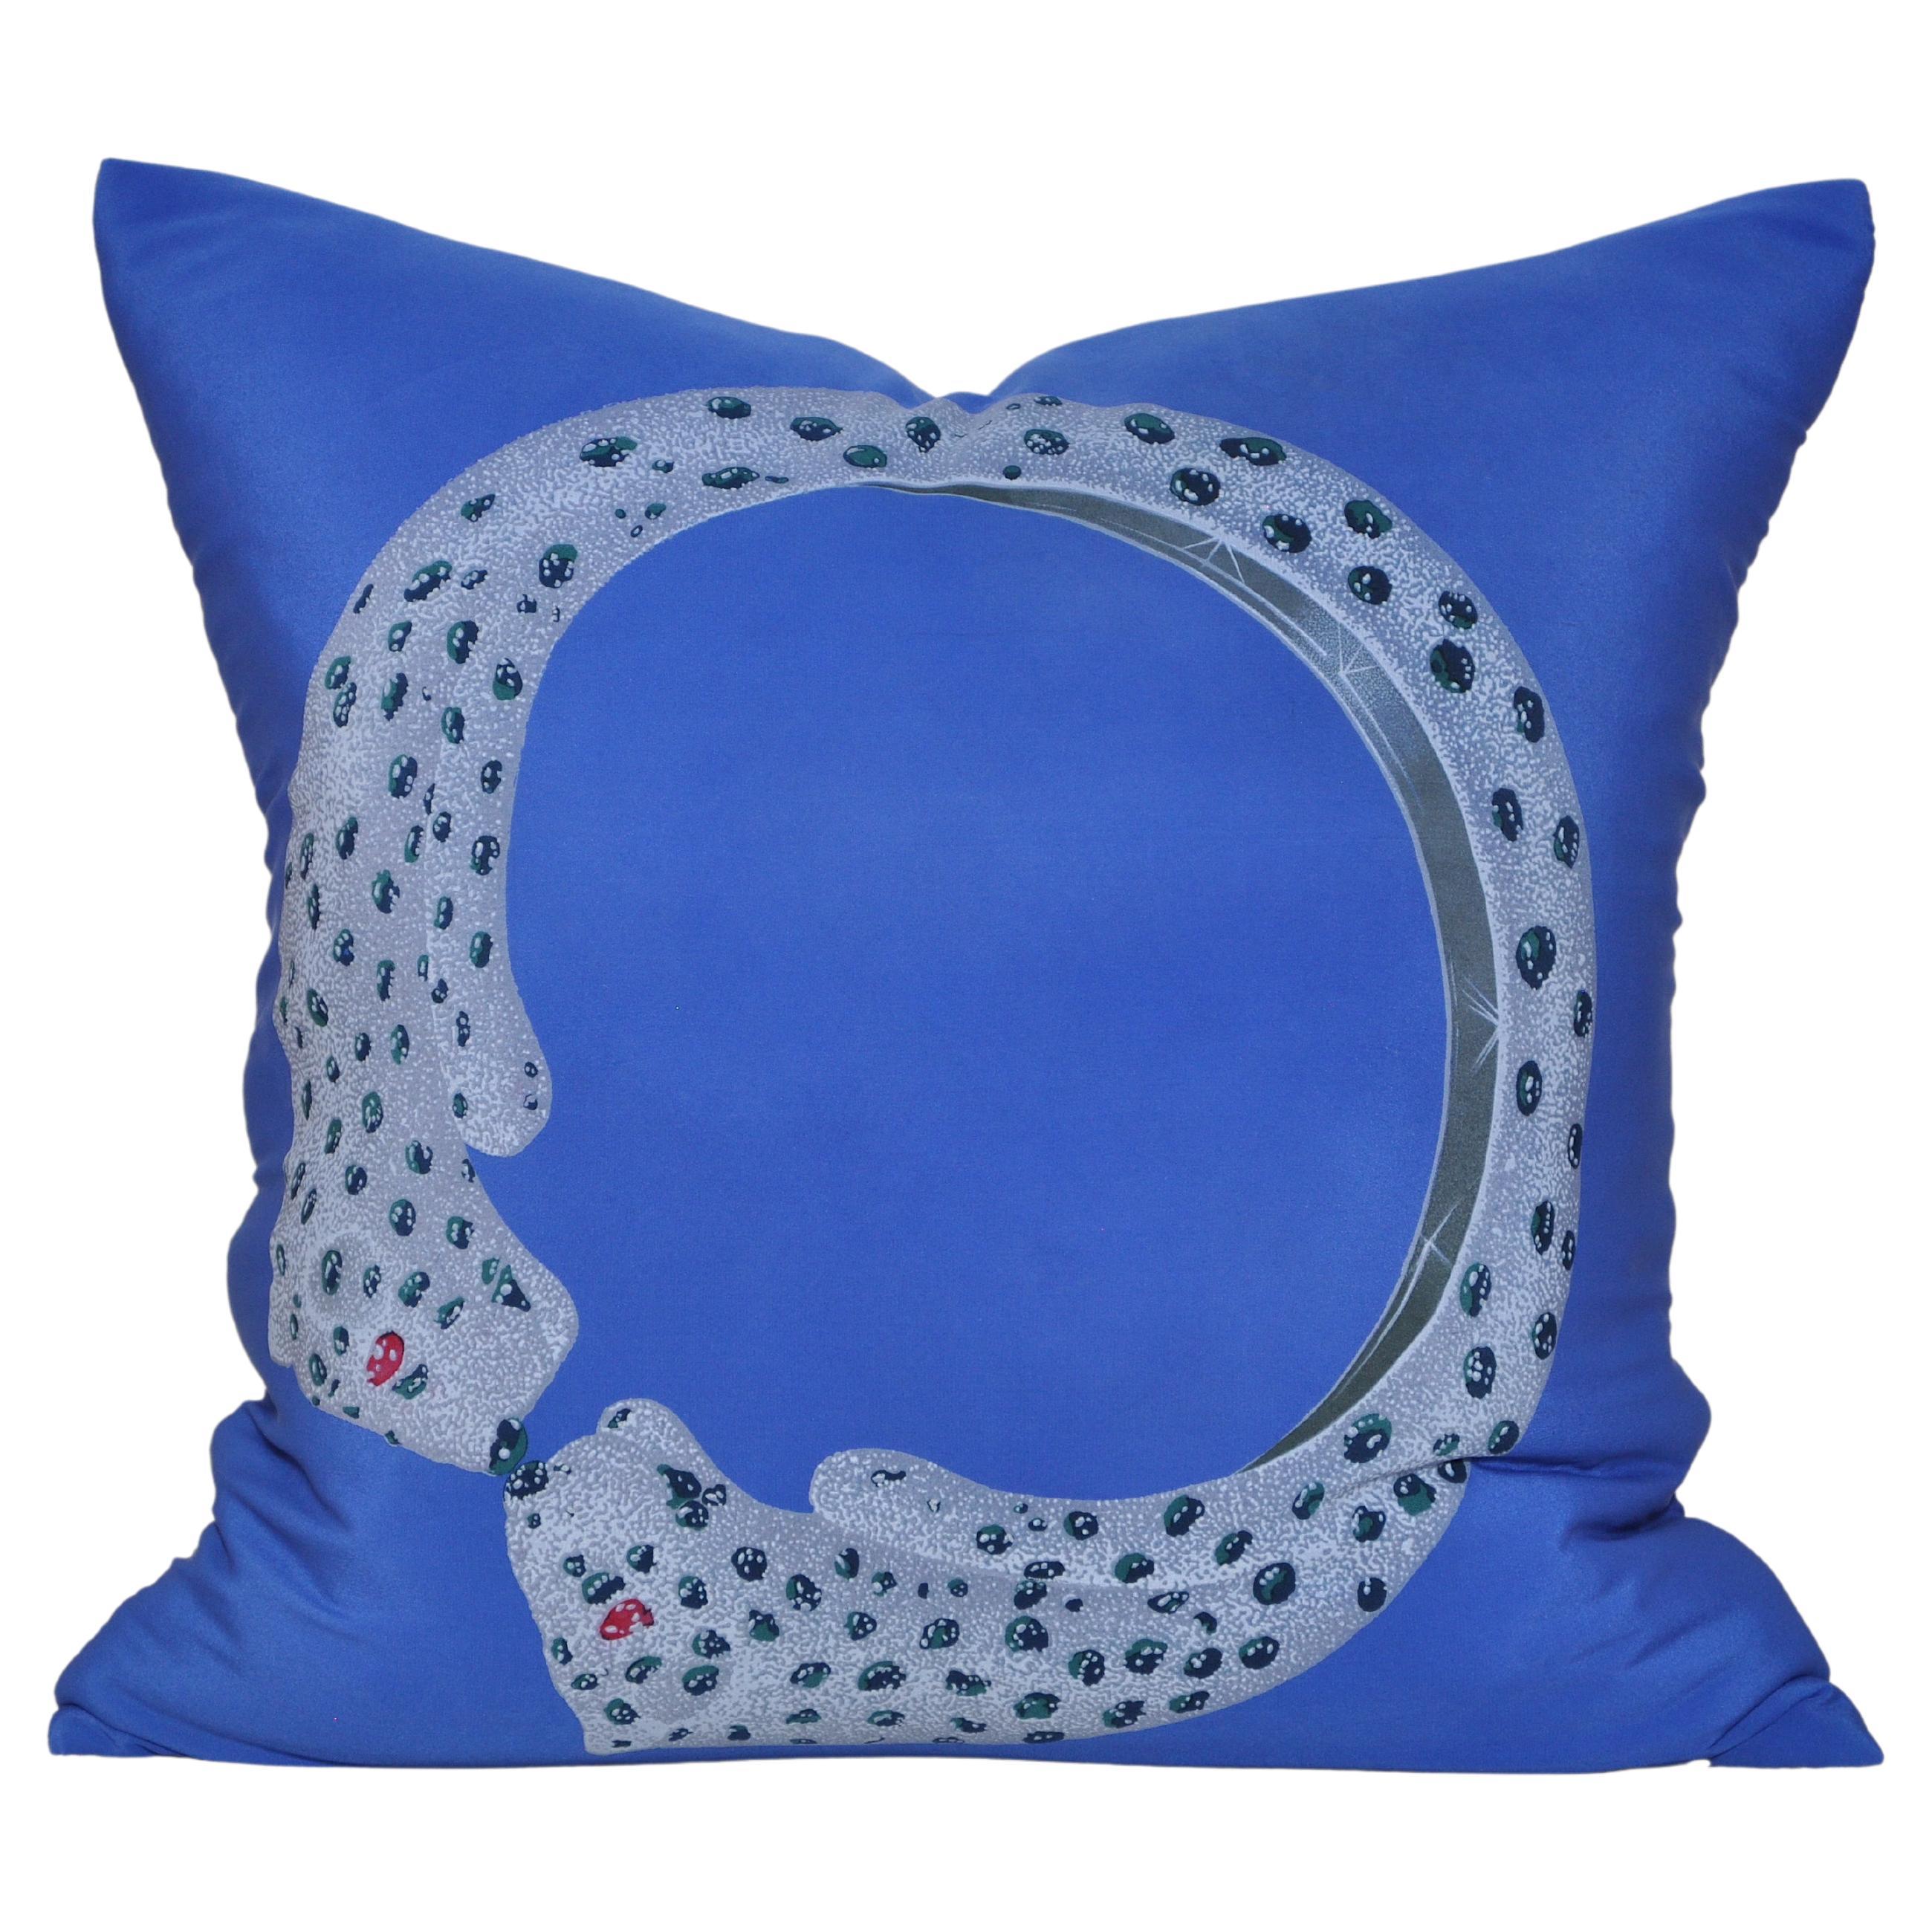 Vintage French Cartier Panther Bracelet Silk Scarf Sapphire Blue Linen Pillow